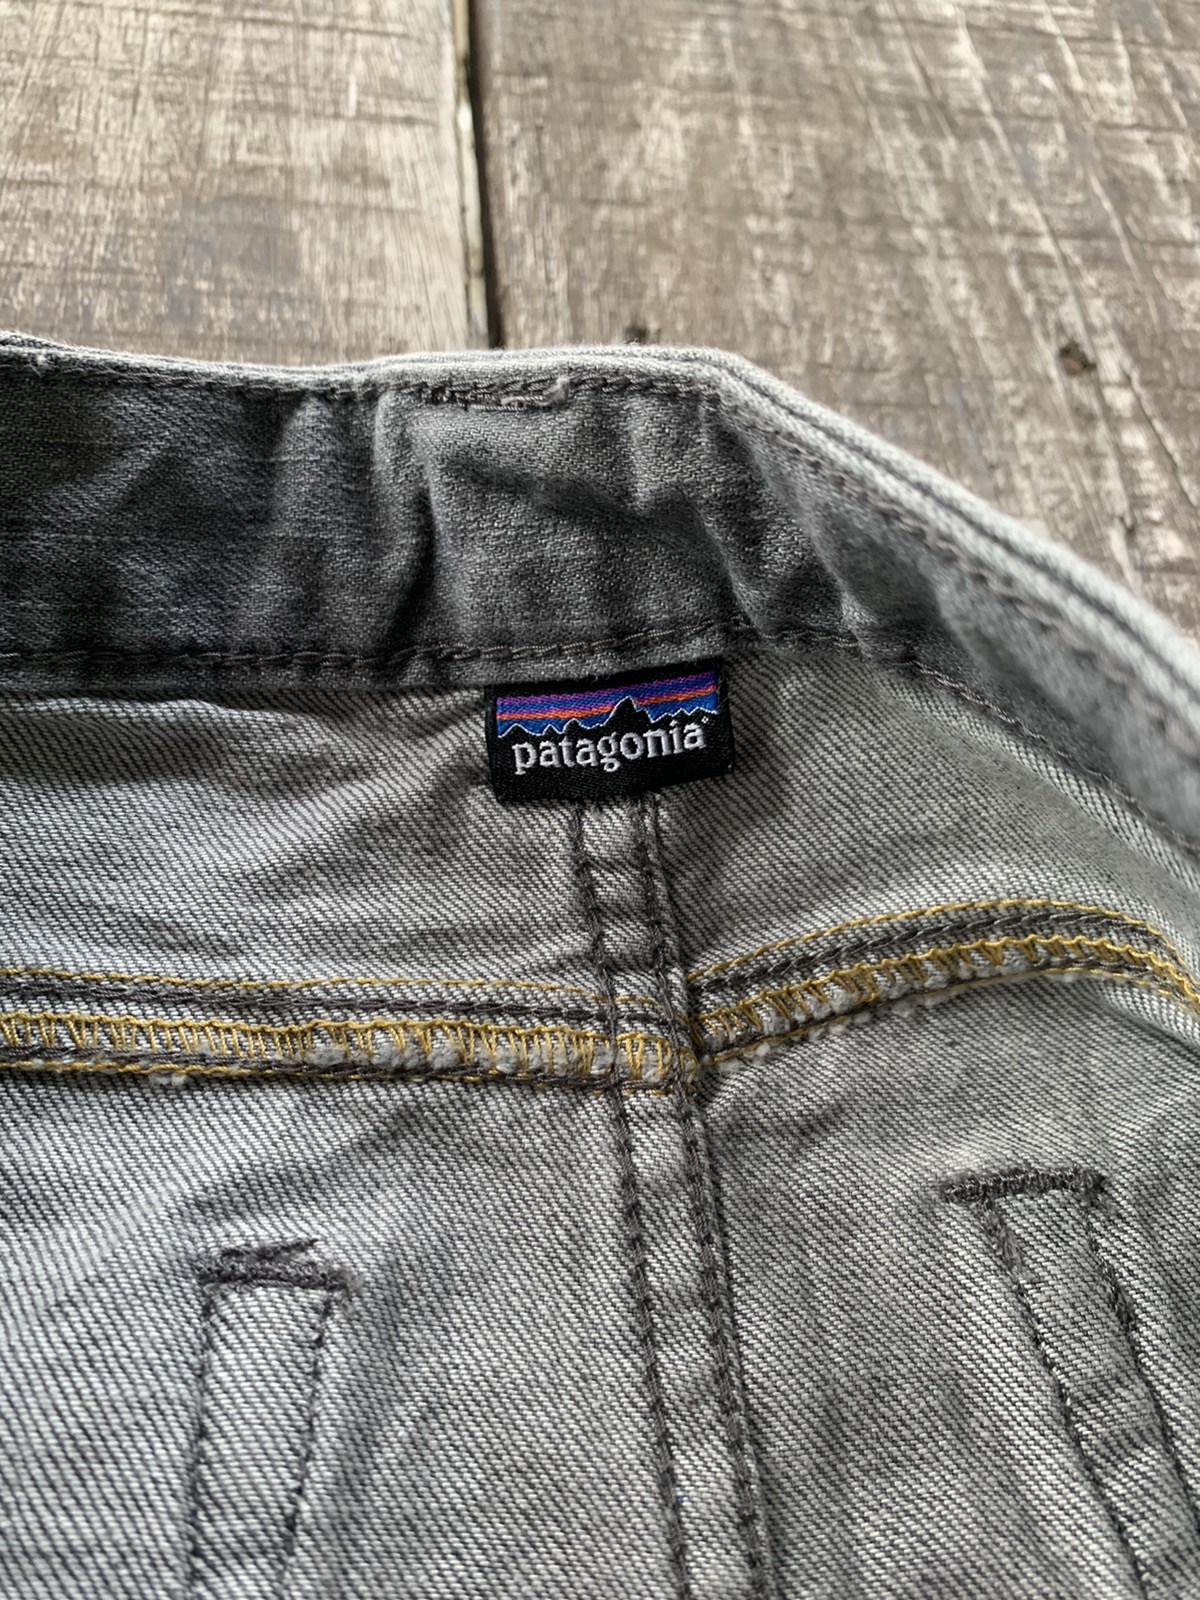 Patagonia jeans mini skirt - 14